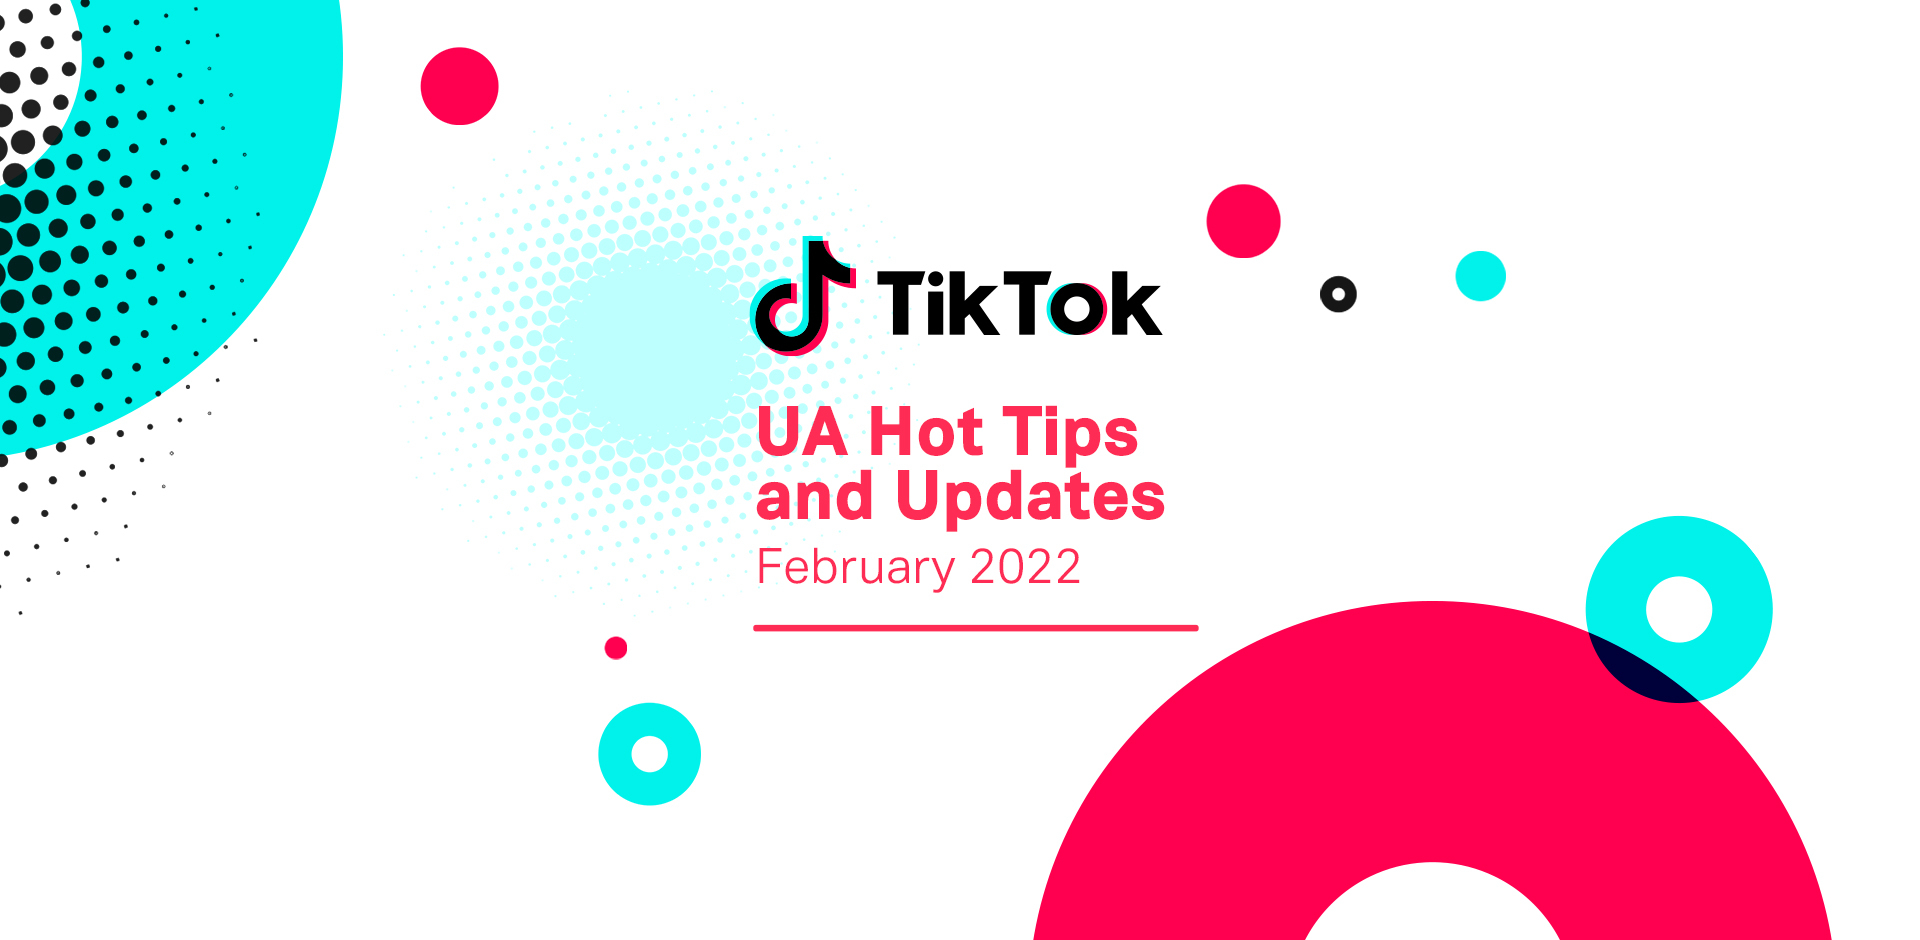 TikTok UA Hot Tips and Updates for February 2022